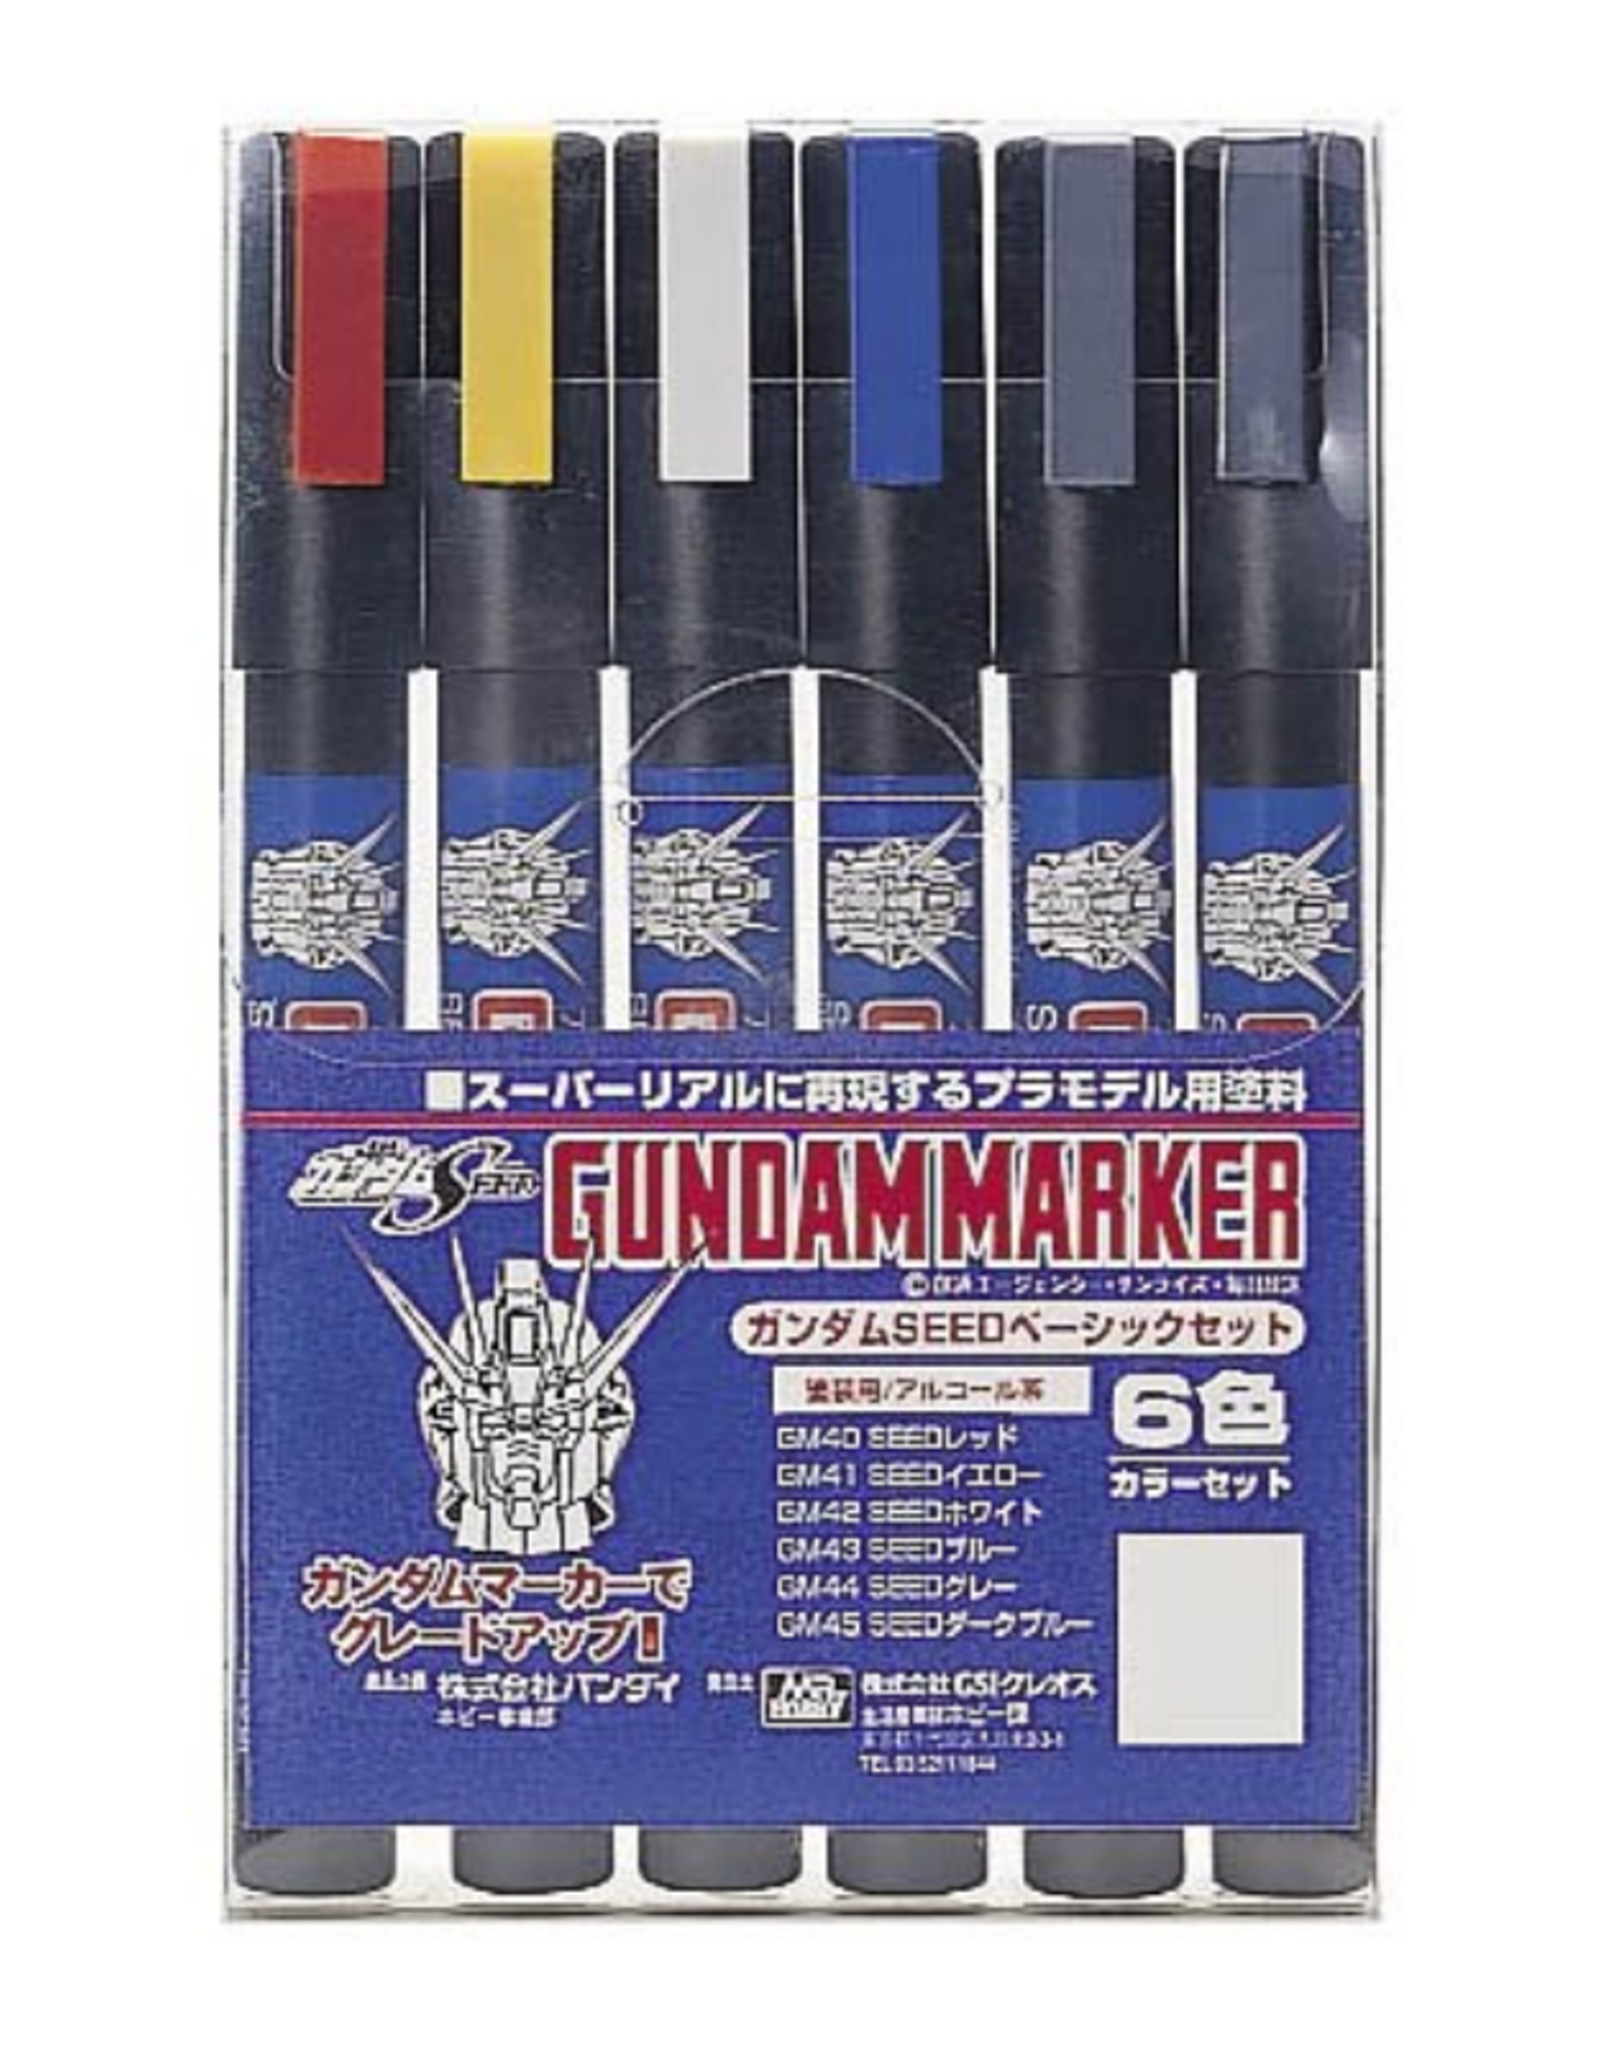 Mr. Hobby Gundam Marker Set (Seed Basic 6pk)